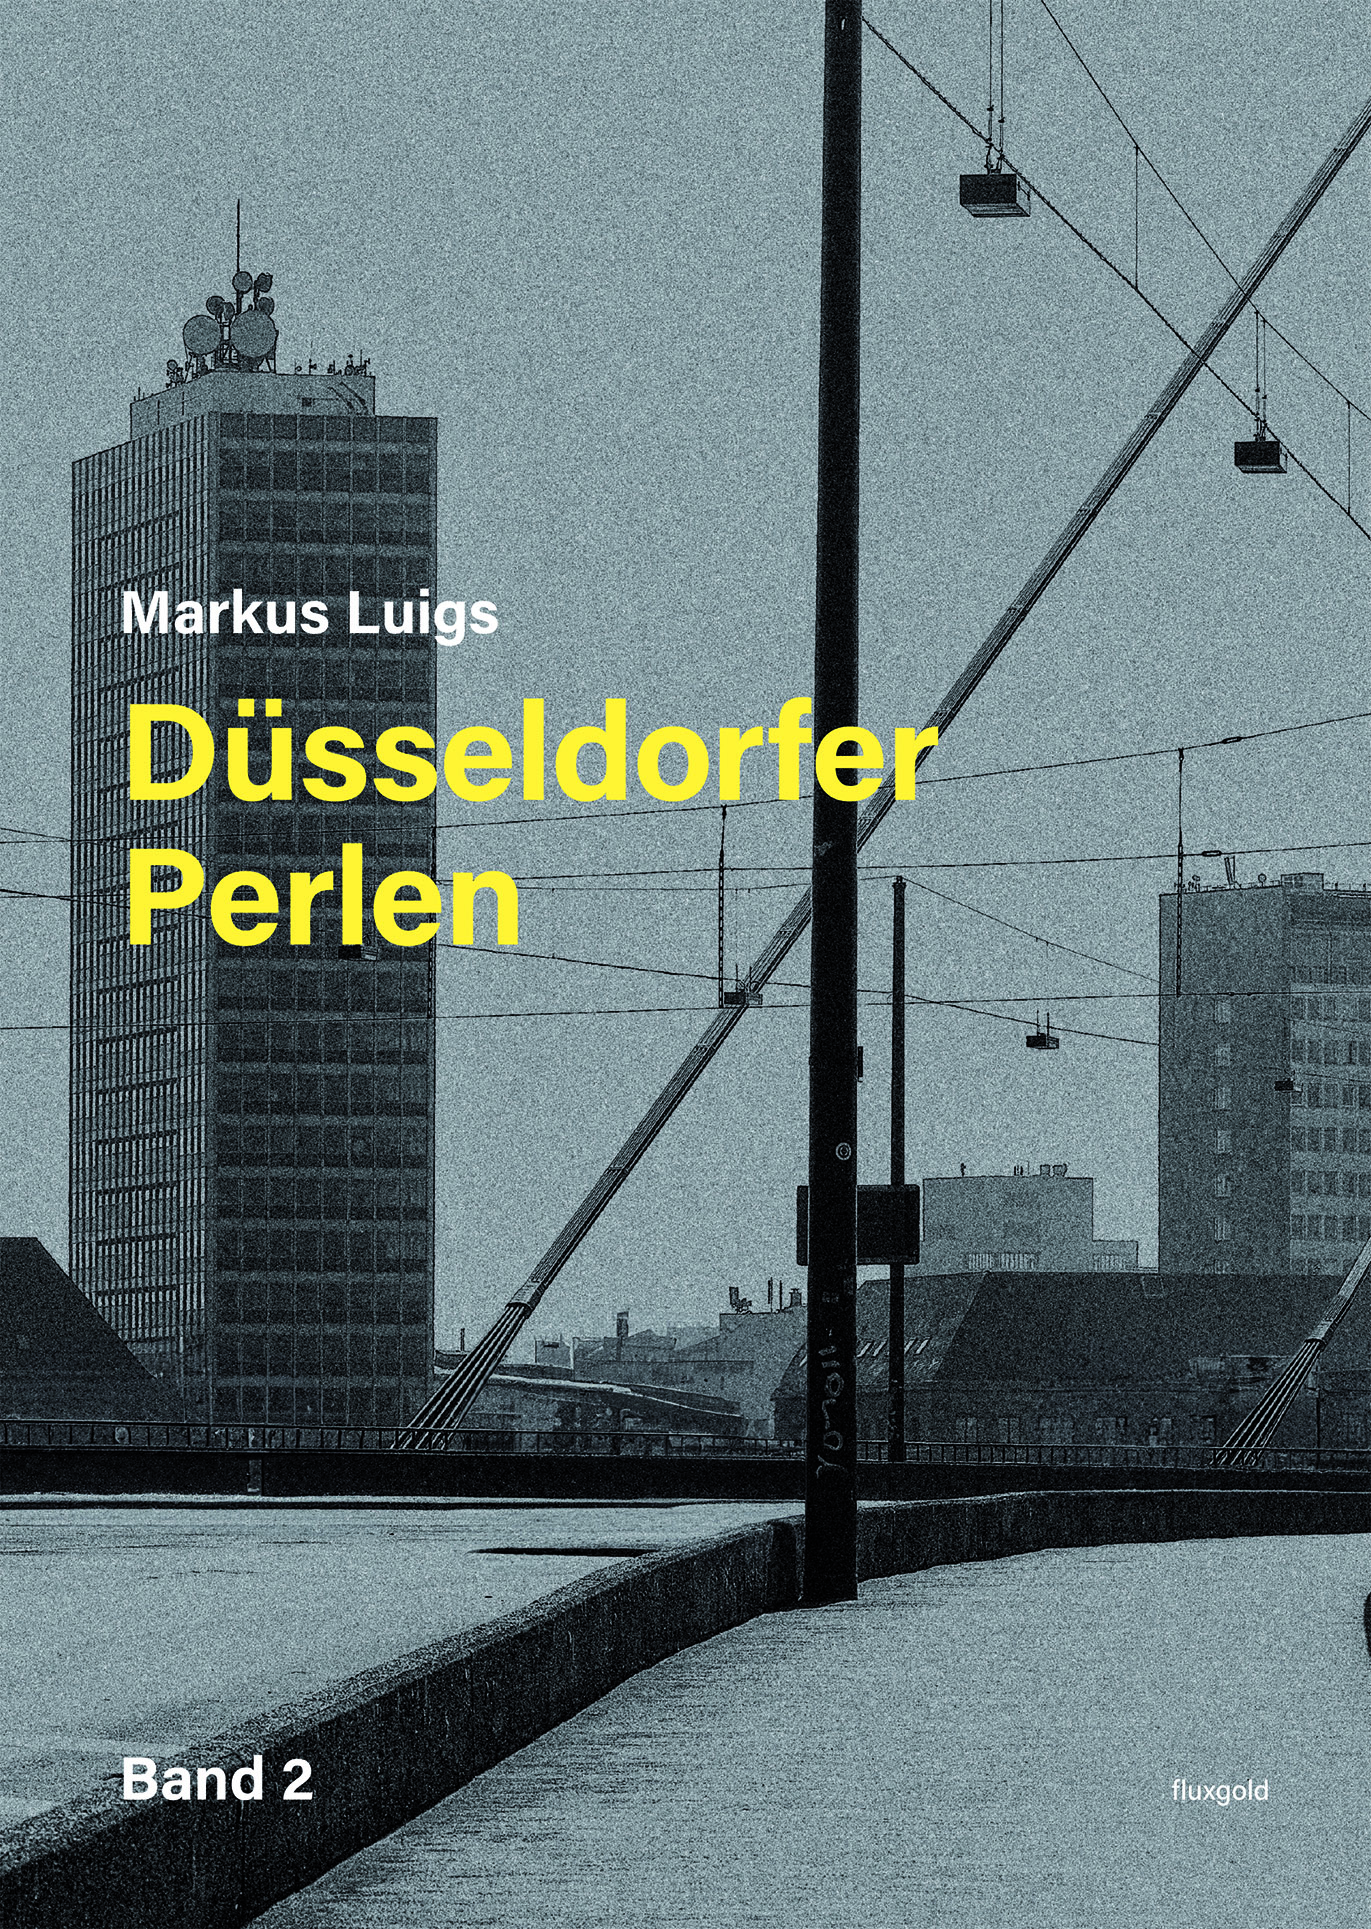 Düsseldorfer Perlen Band 2 © Markus Luigs